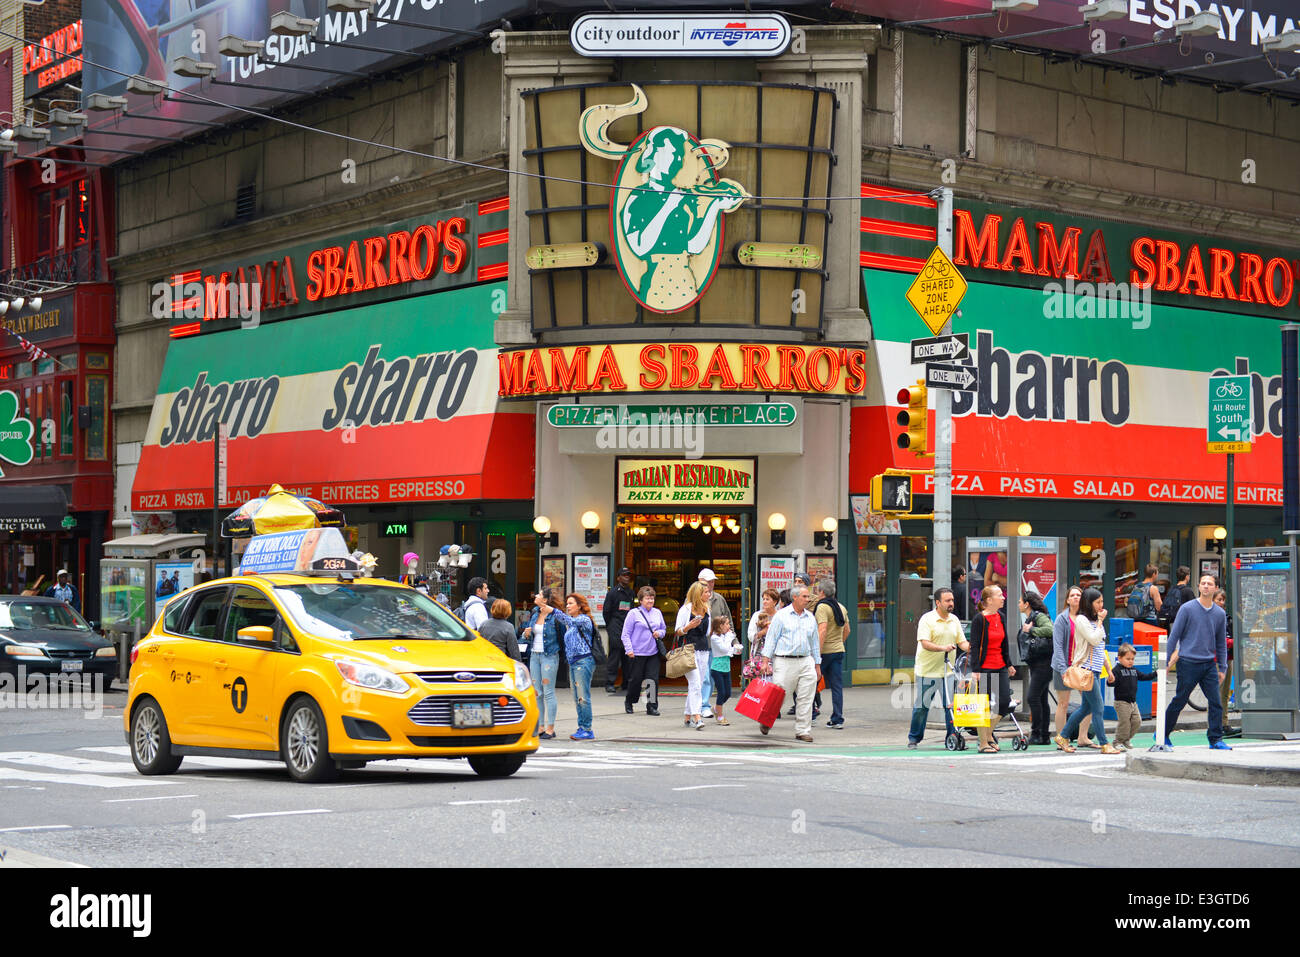 Sbarro, Mama Sbarro's, Times Square, New York Stock Photo